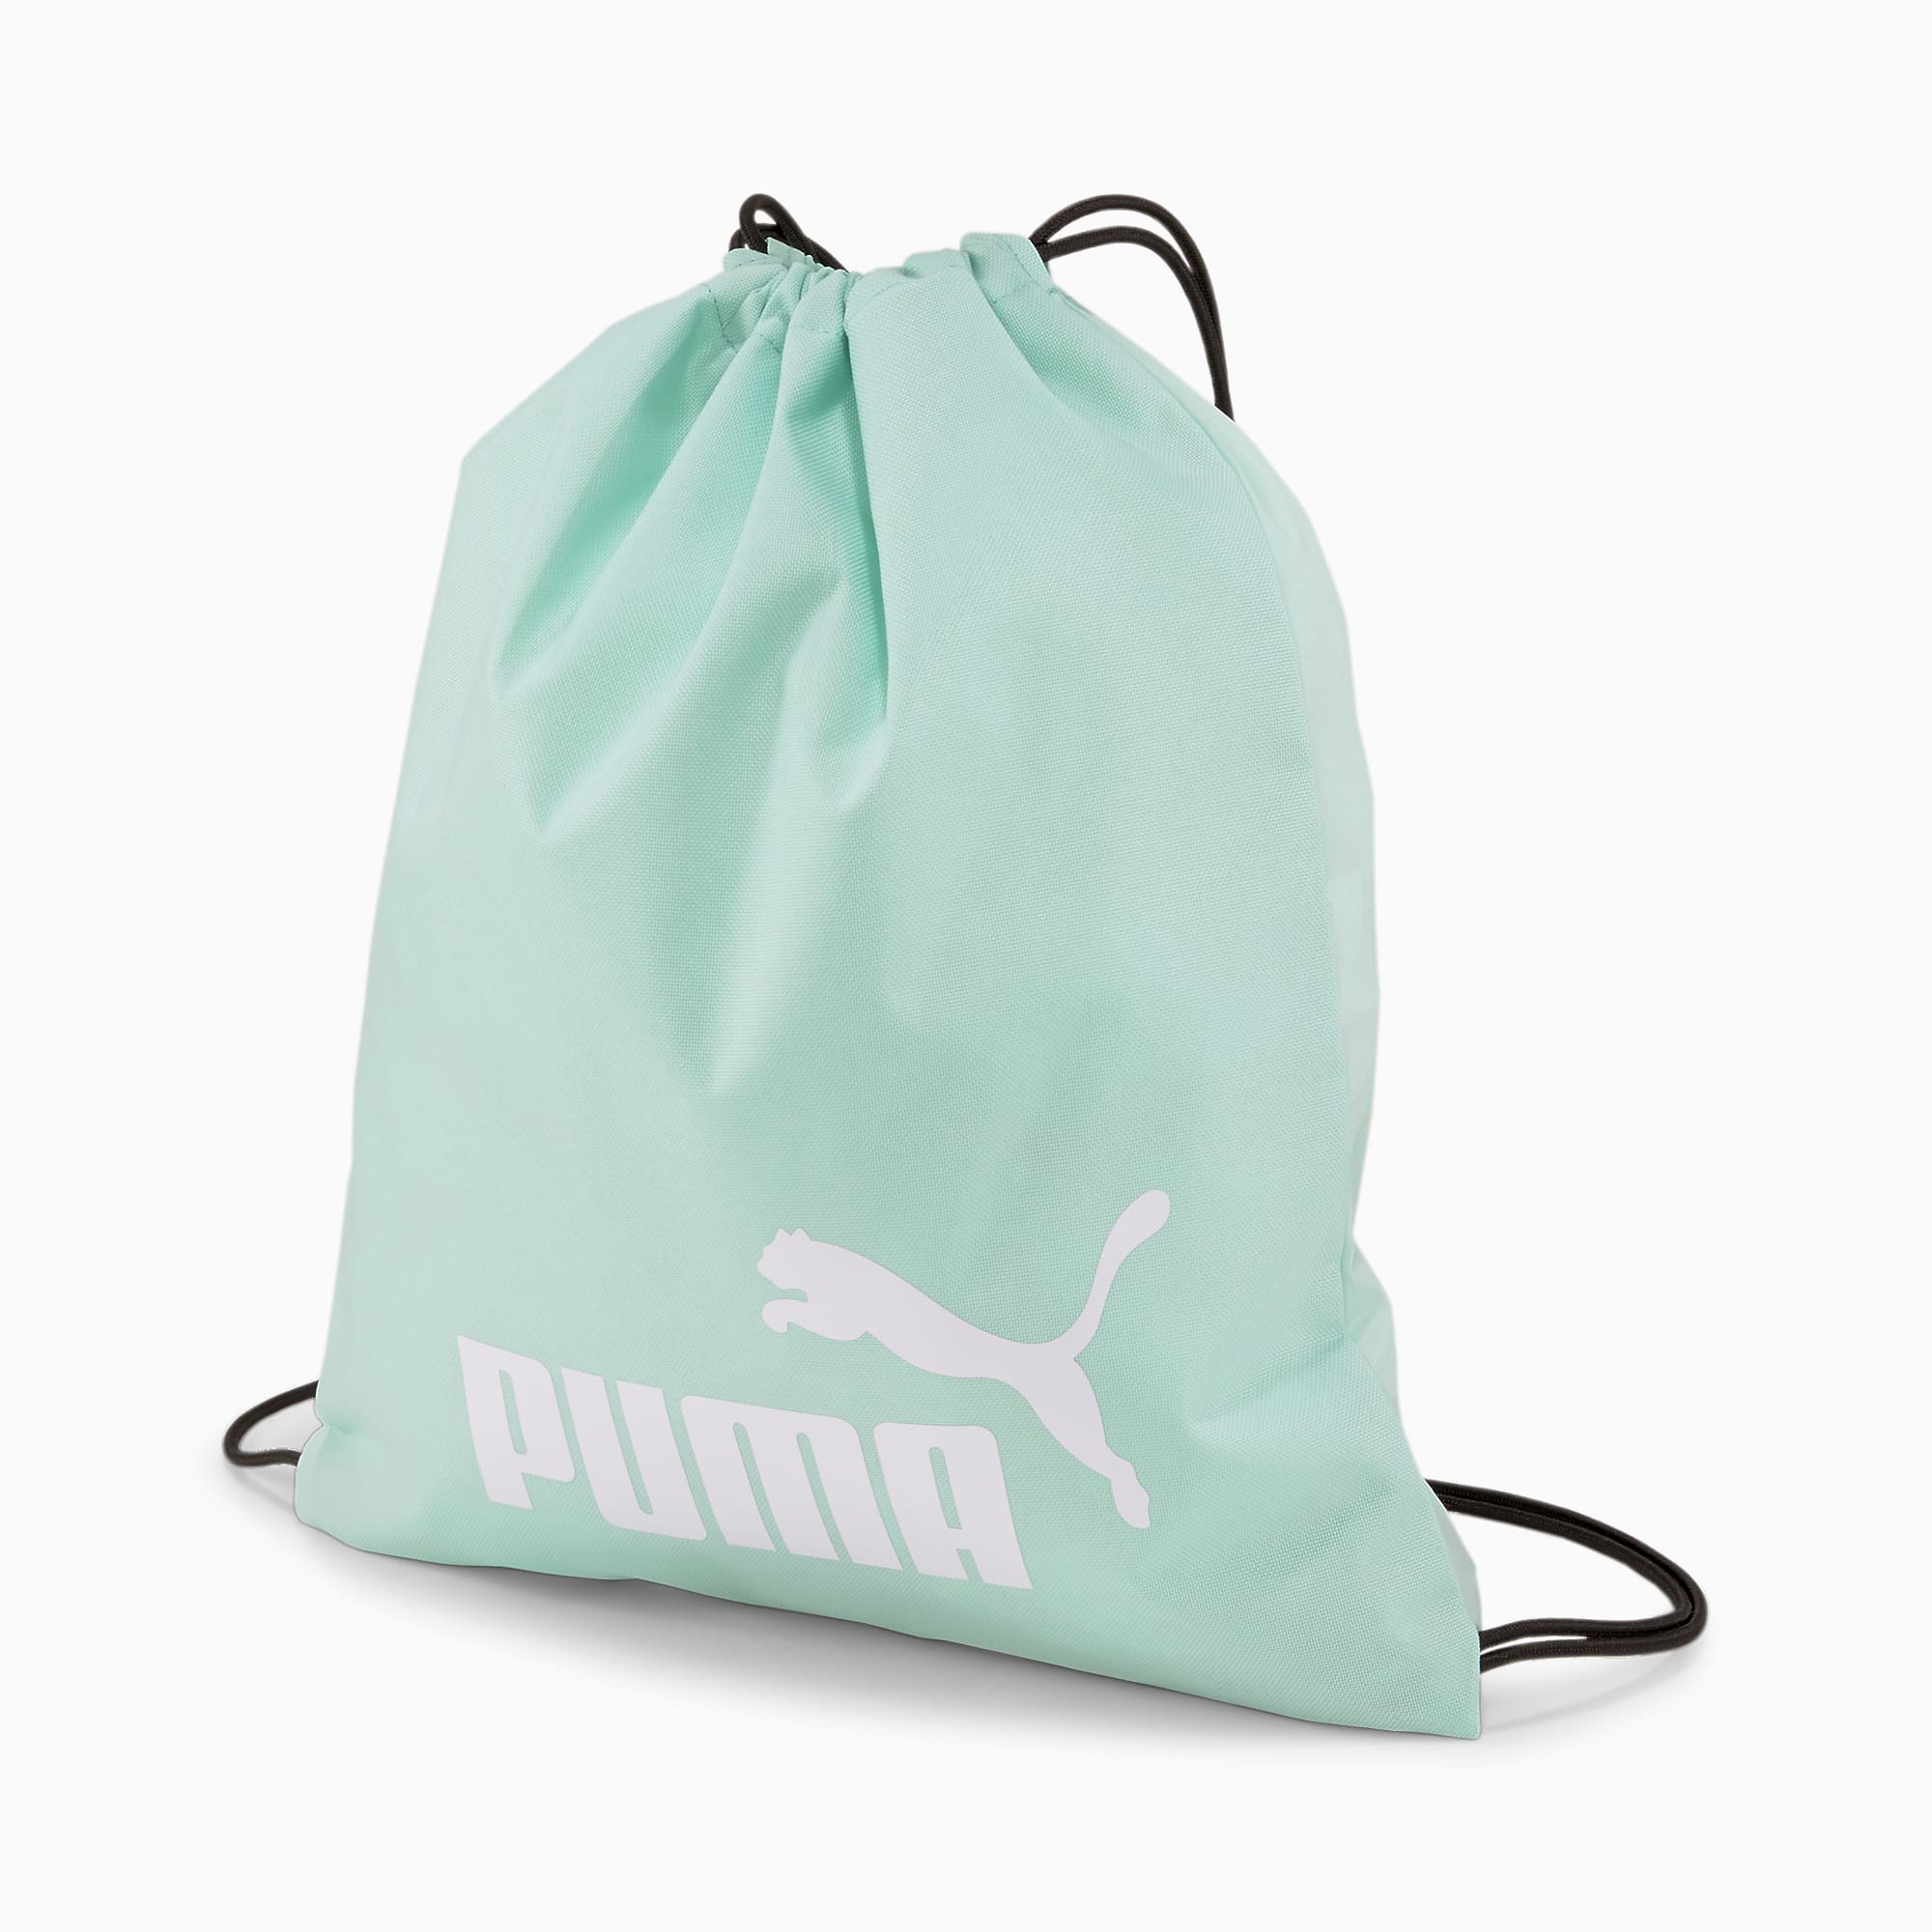 puma back bag